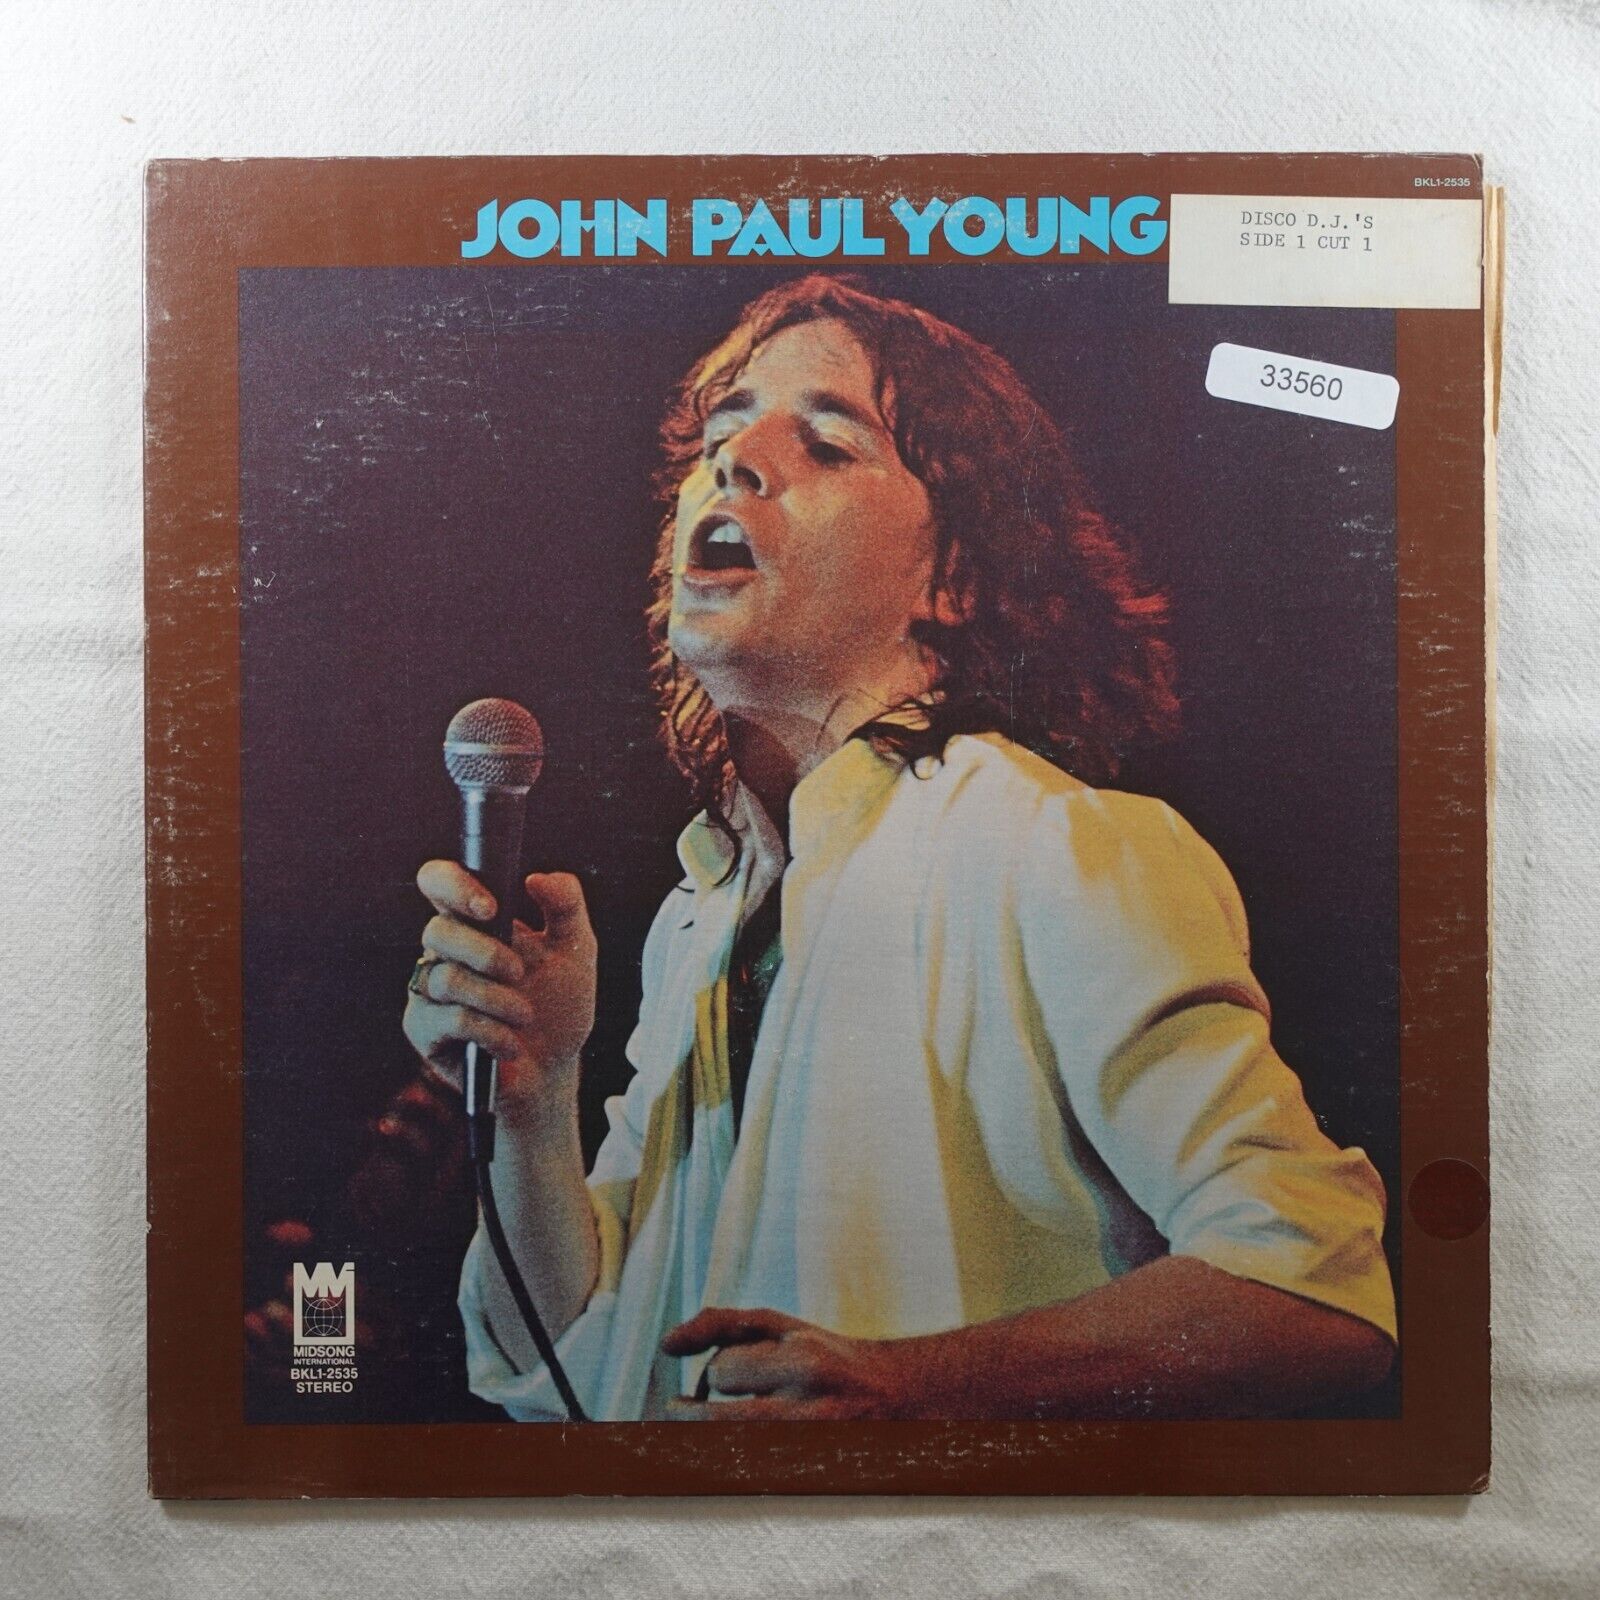 John Paul Young Self Titled PROMO LP Vinyl Record Album